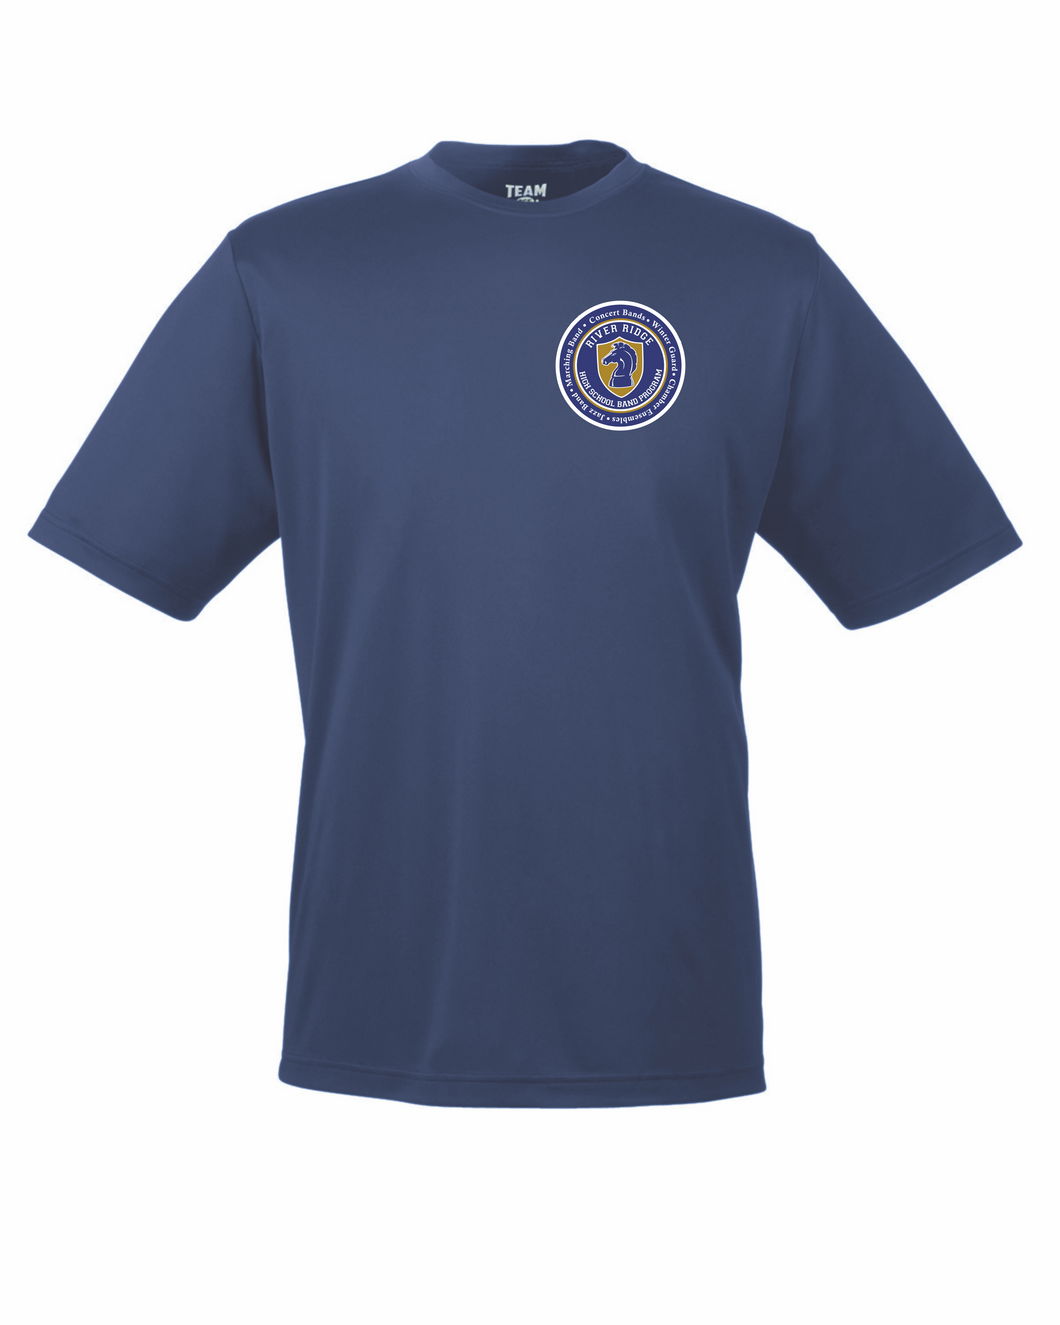 RR-BND-607-1 - Team 365 Zone Performance Short-Sleeve T-Shirt - River Ridge Bands Logo